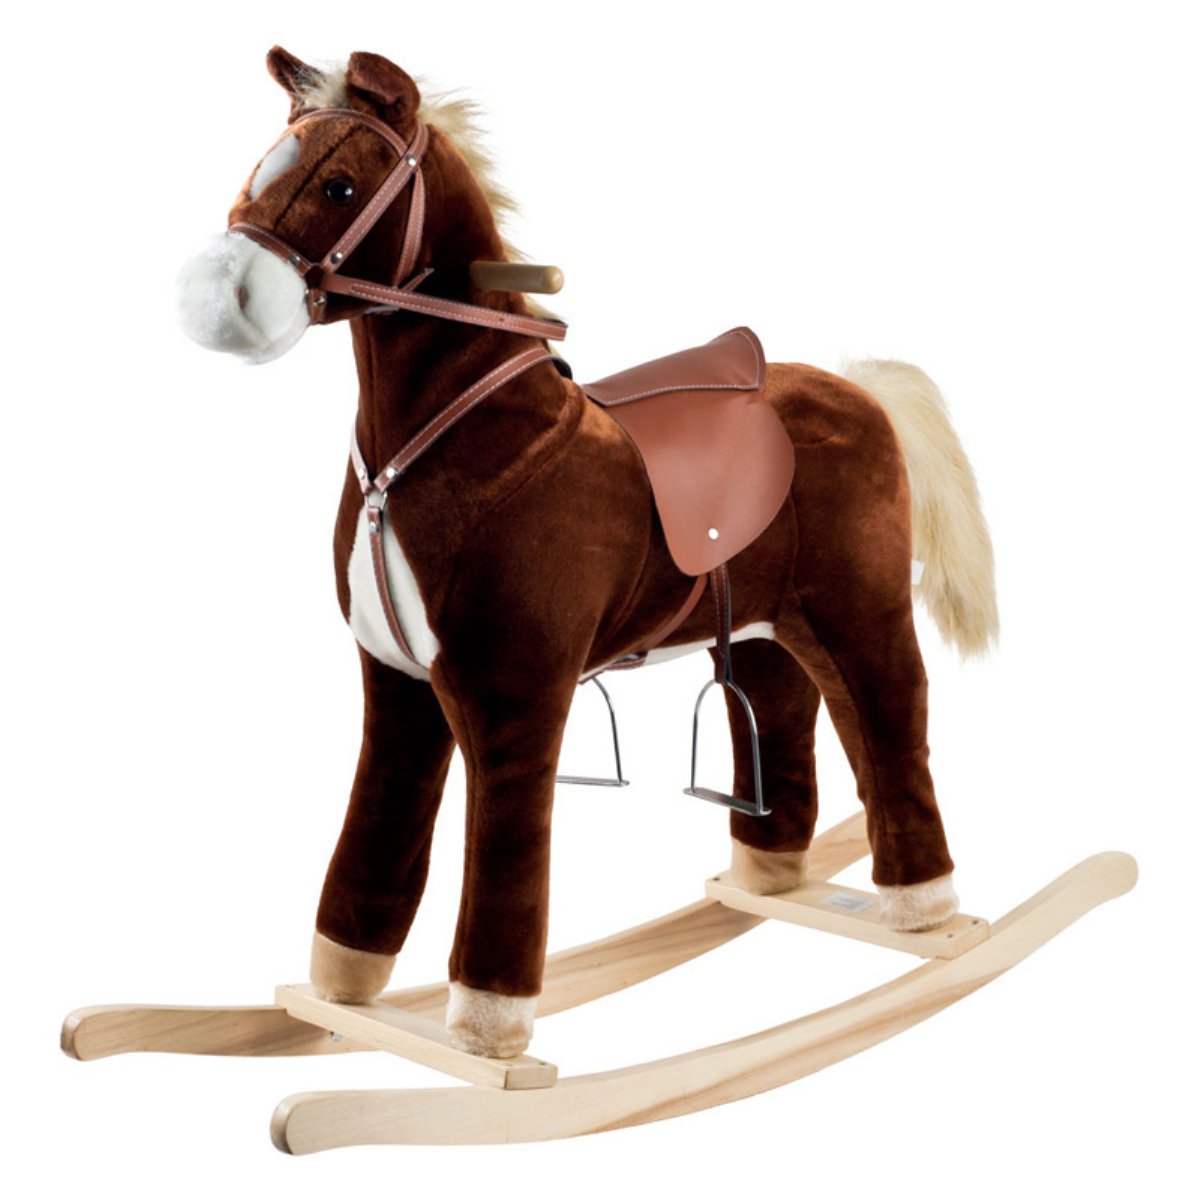 Plush Rocking Horses | Buy a Spring Rocking Horse at Hayneedle.com ...